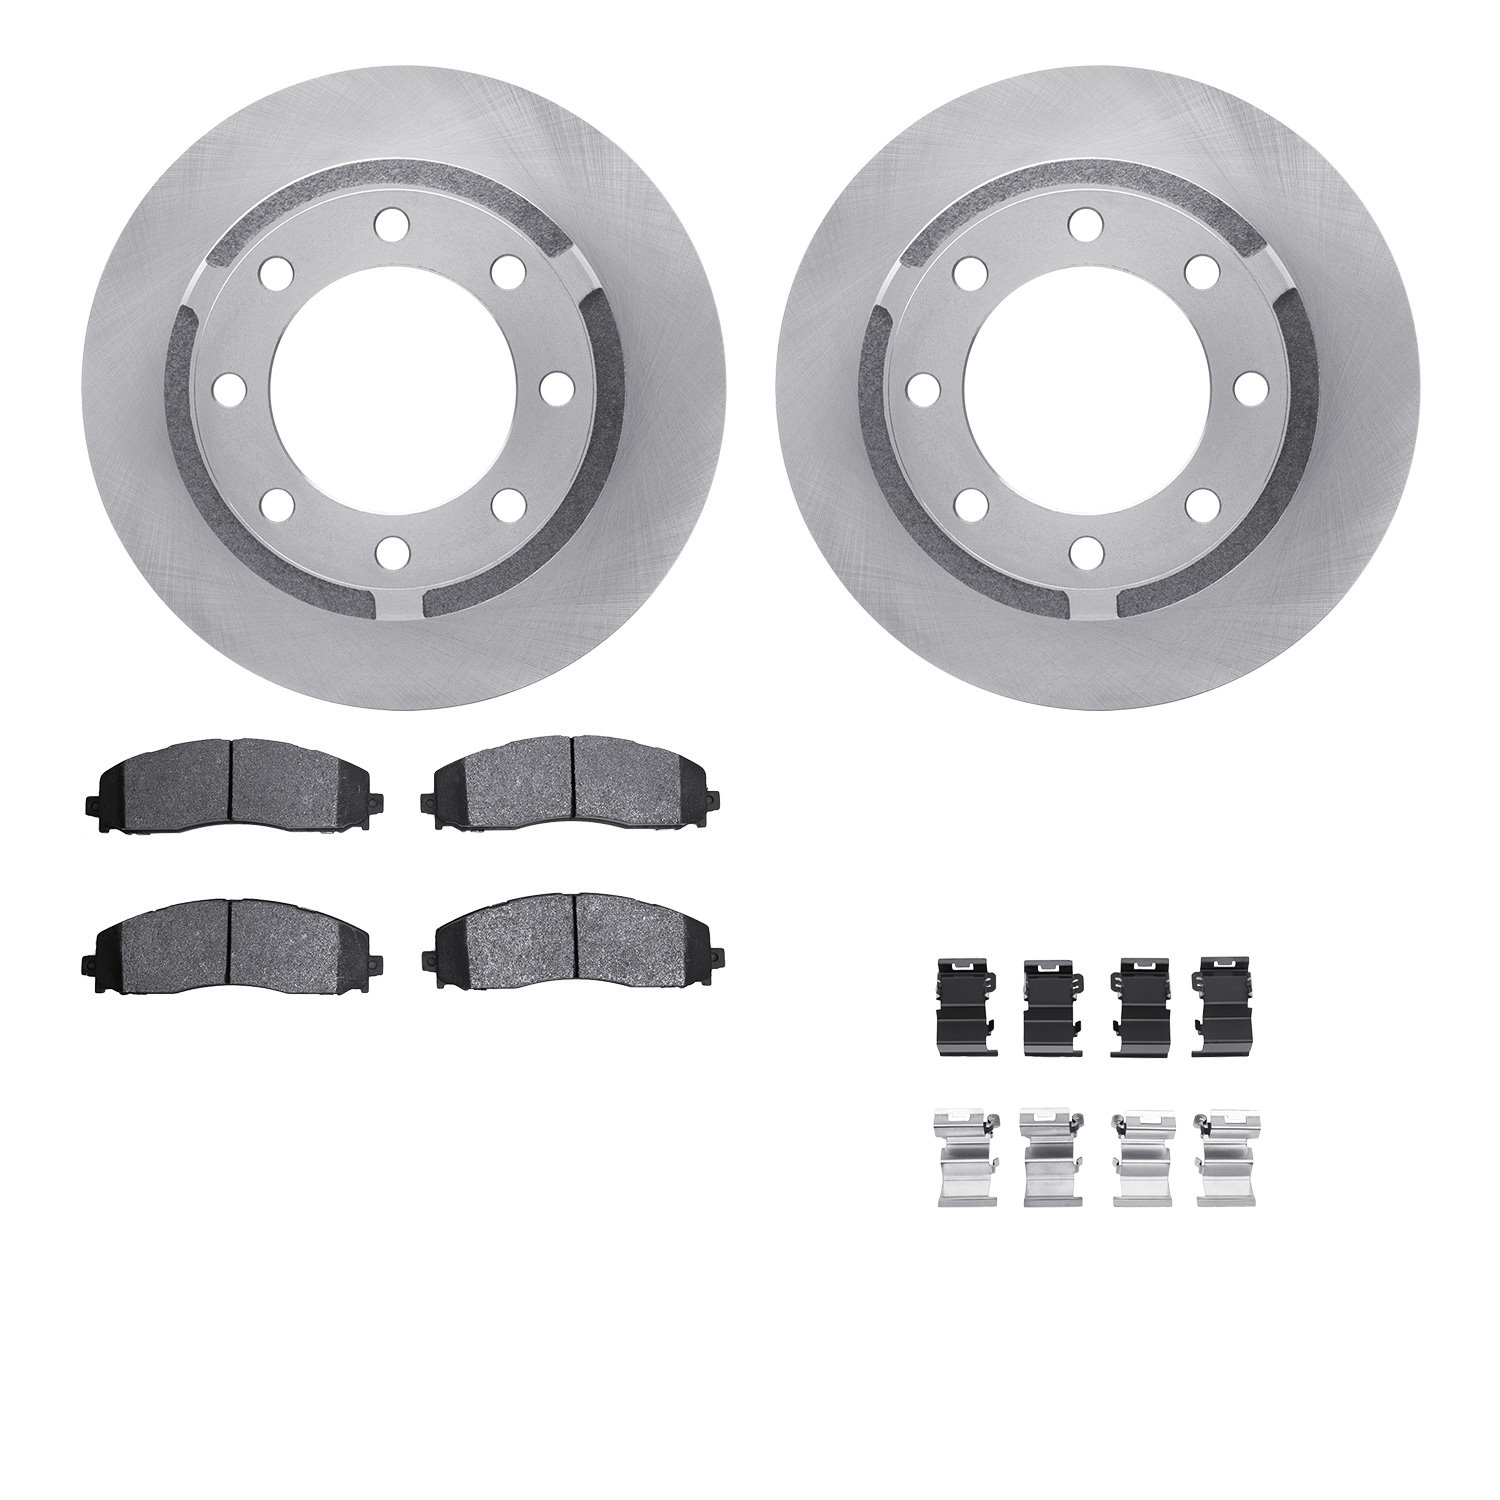 6212-99714 Brake Rotors w/Heavy-Duty Brake Pads Kit & Hardware, Fits Select Ford/Lincoln/Mercury/Mazda, Position: Rear